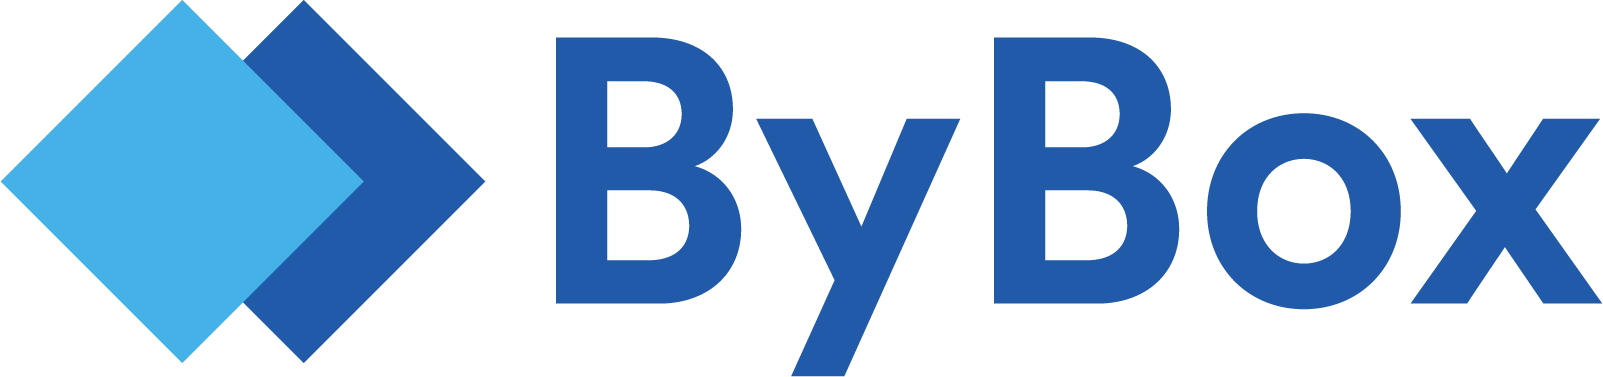 ByBox Despatcher Logo